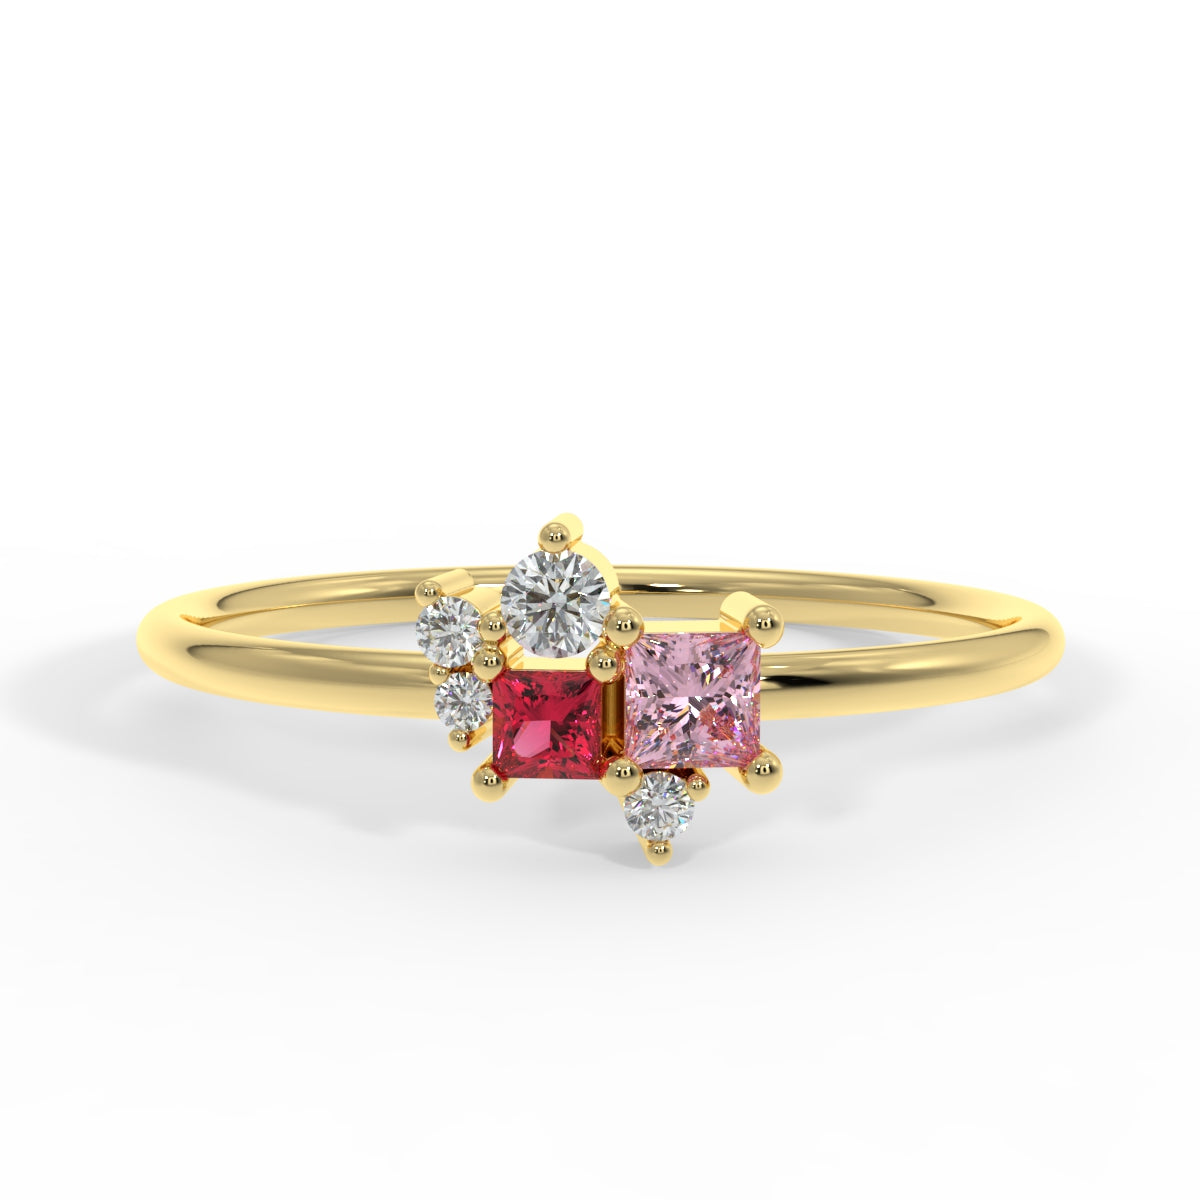 Cluster Gemstones Ring, Birthstone Gift ring